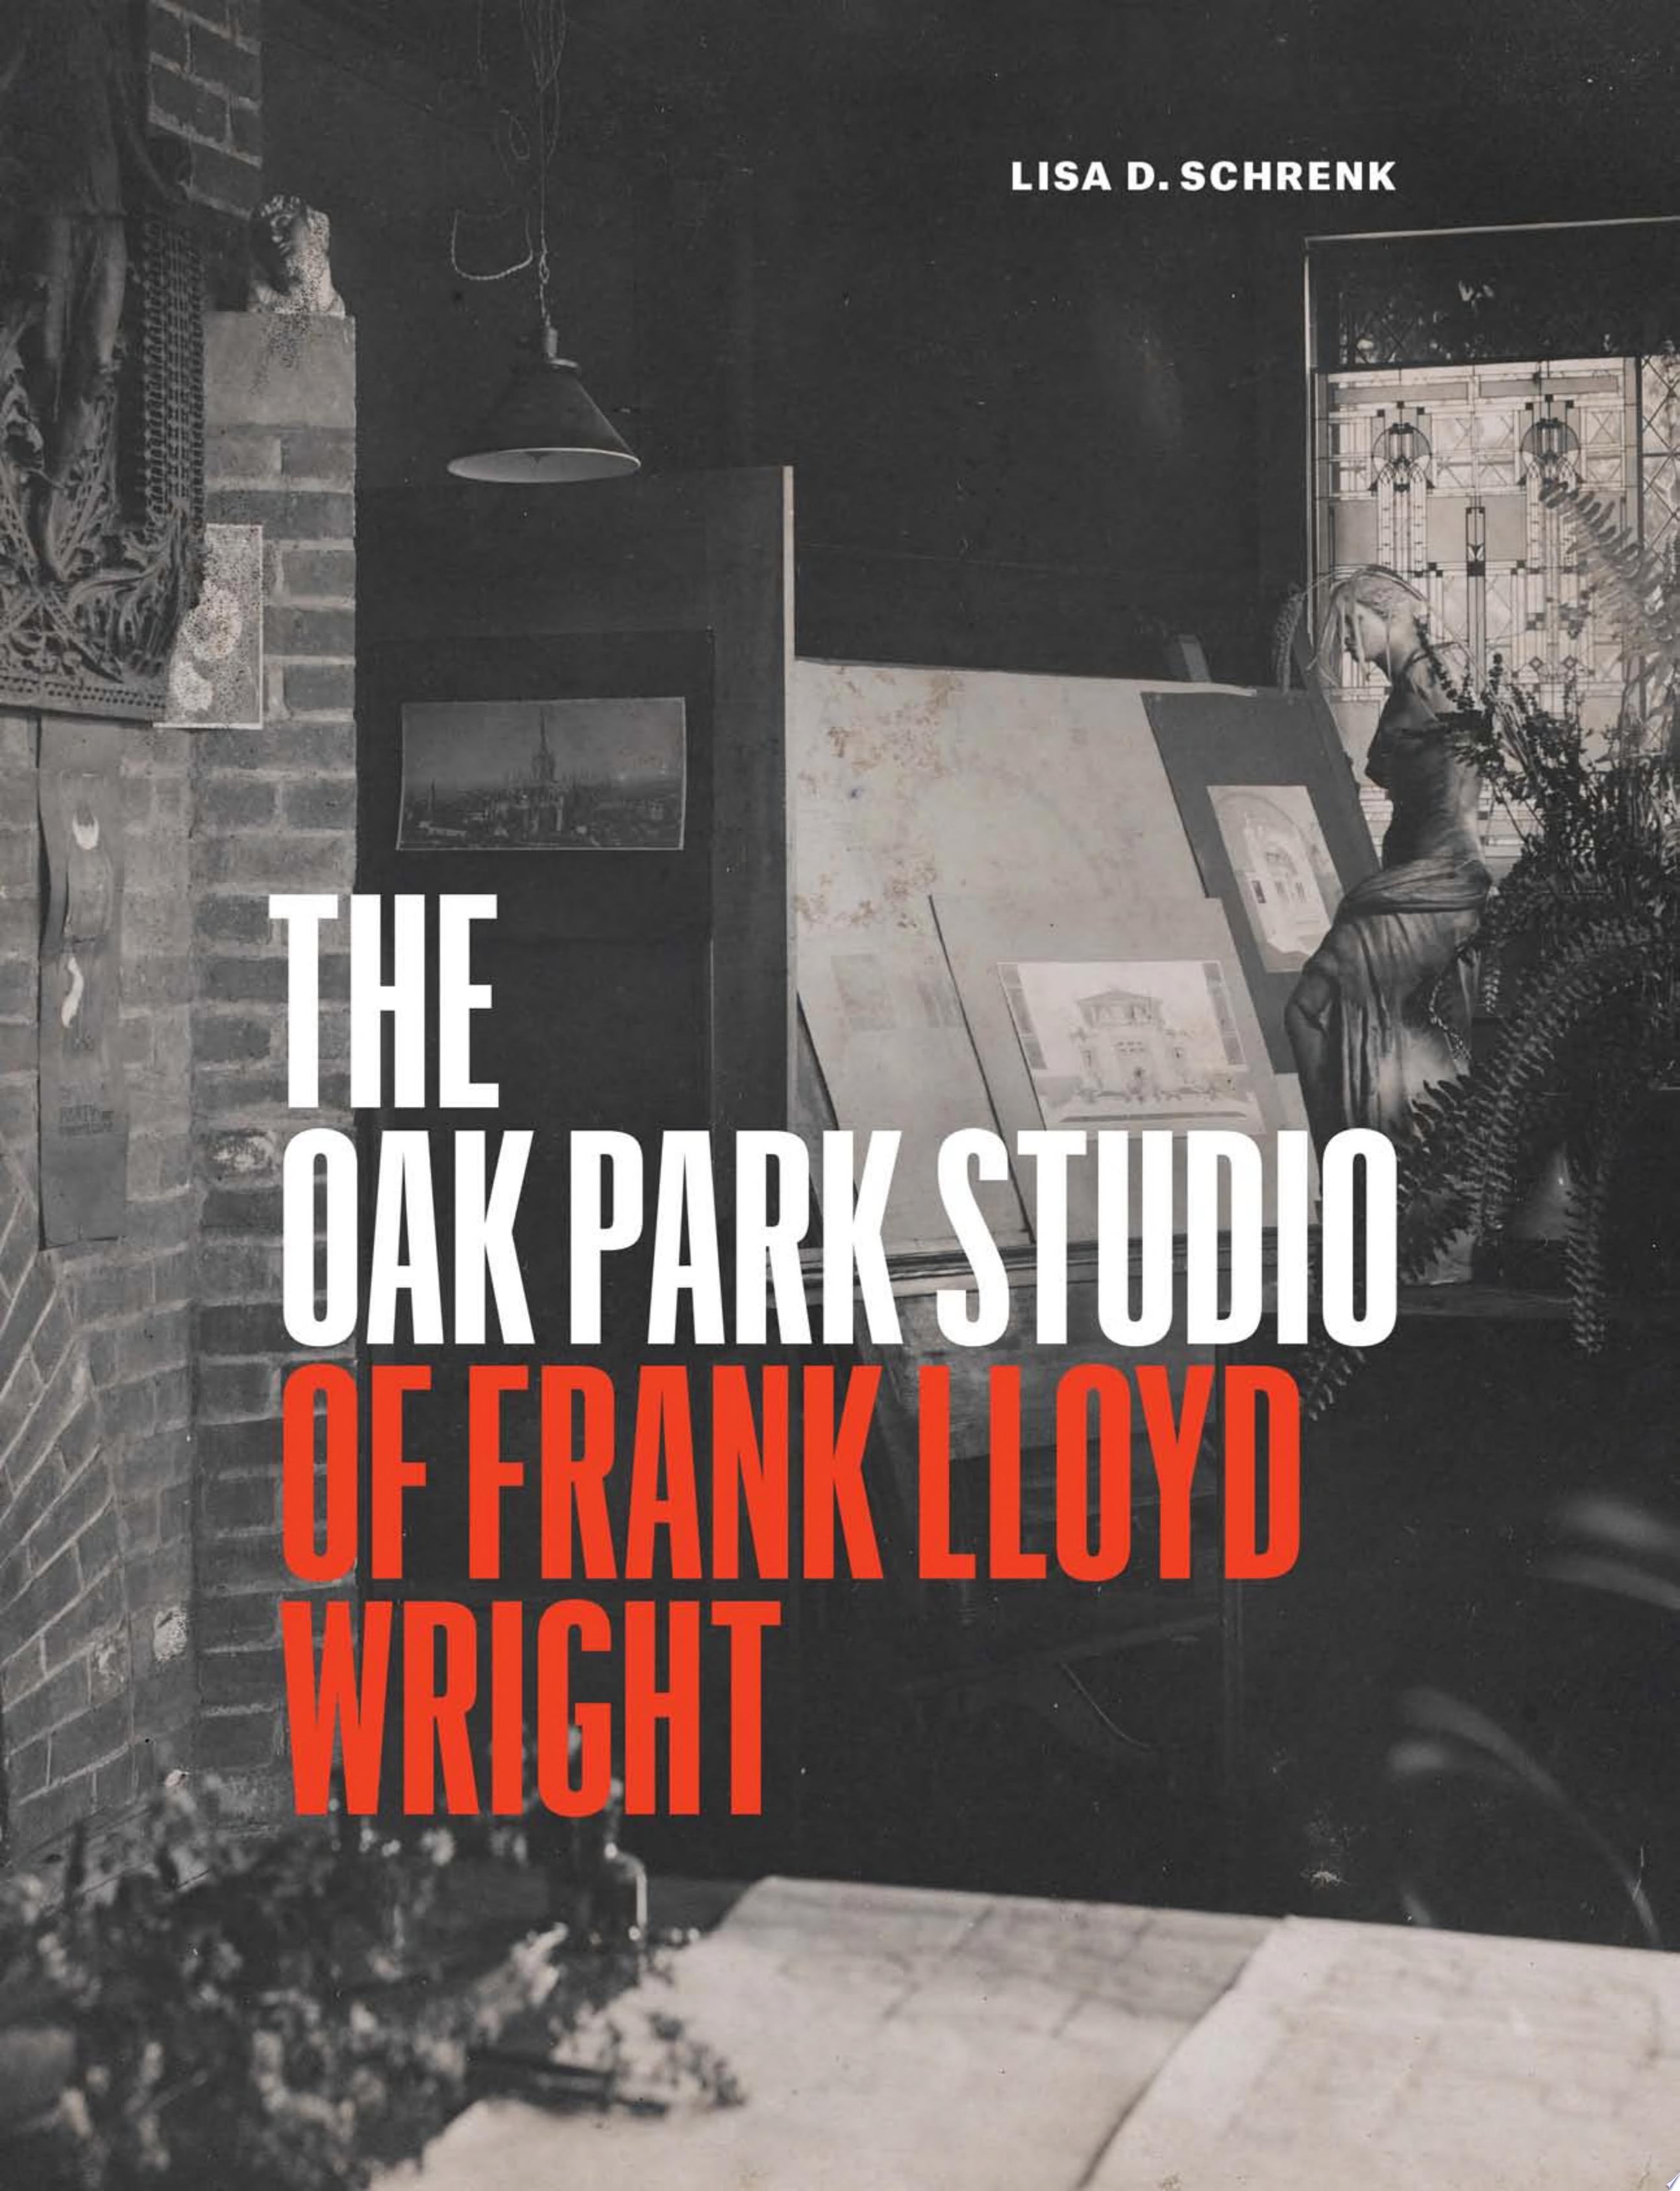 Image for "The Oak Park Studio of Frank Lloyd Wright"